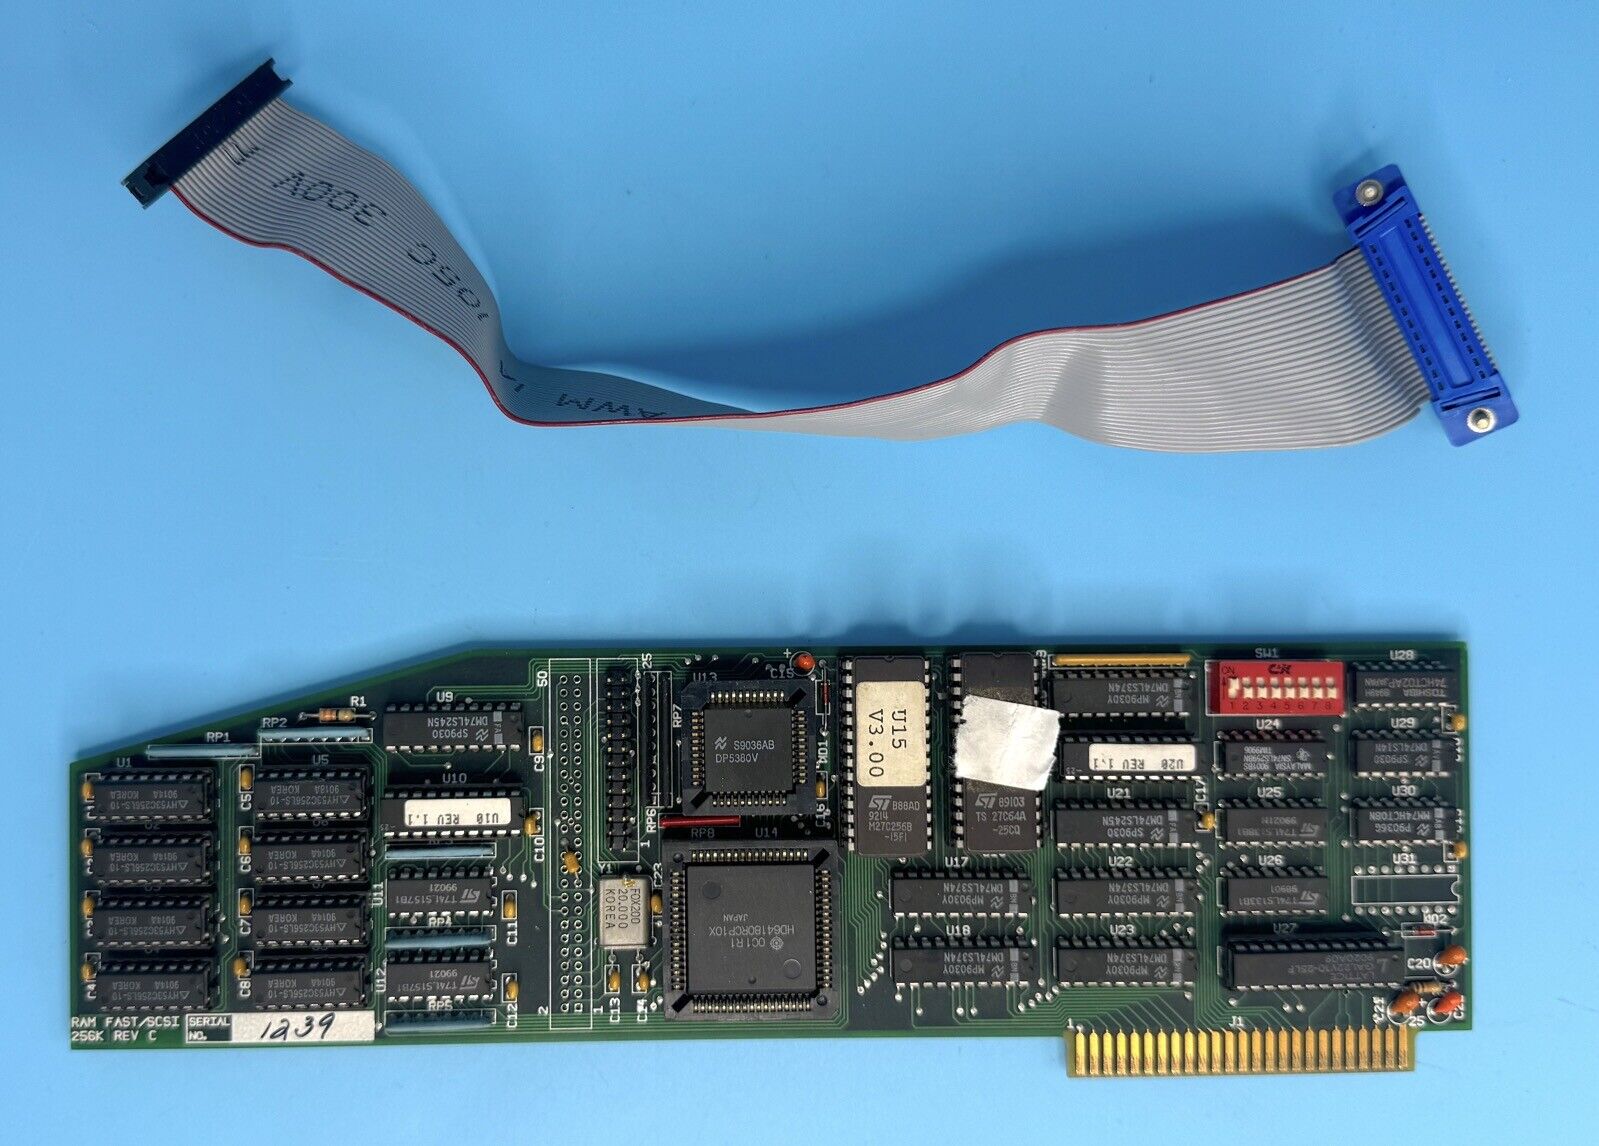 RamFAST/SCSI Rev. C for Apple II Computers 256K Cache RamFAST SCSI – Works